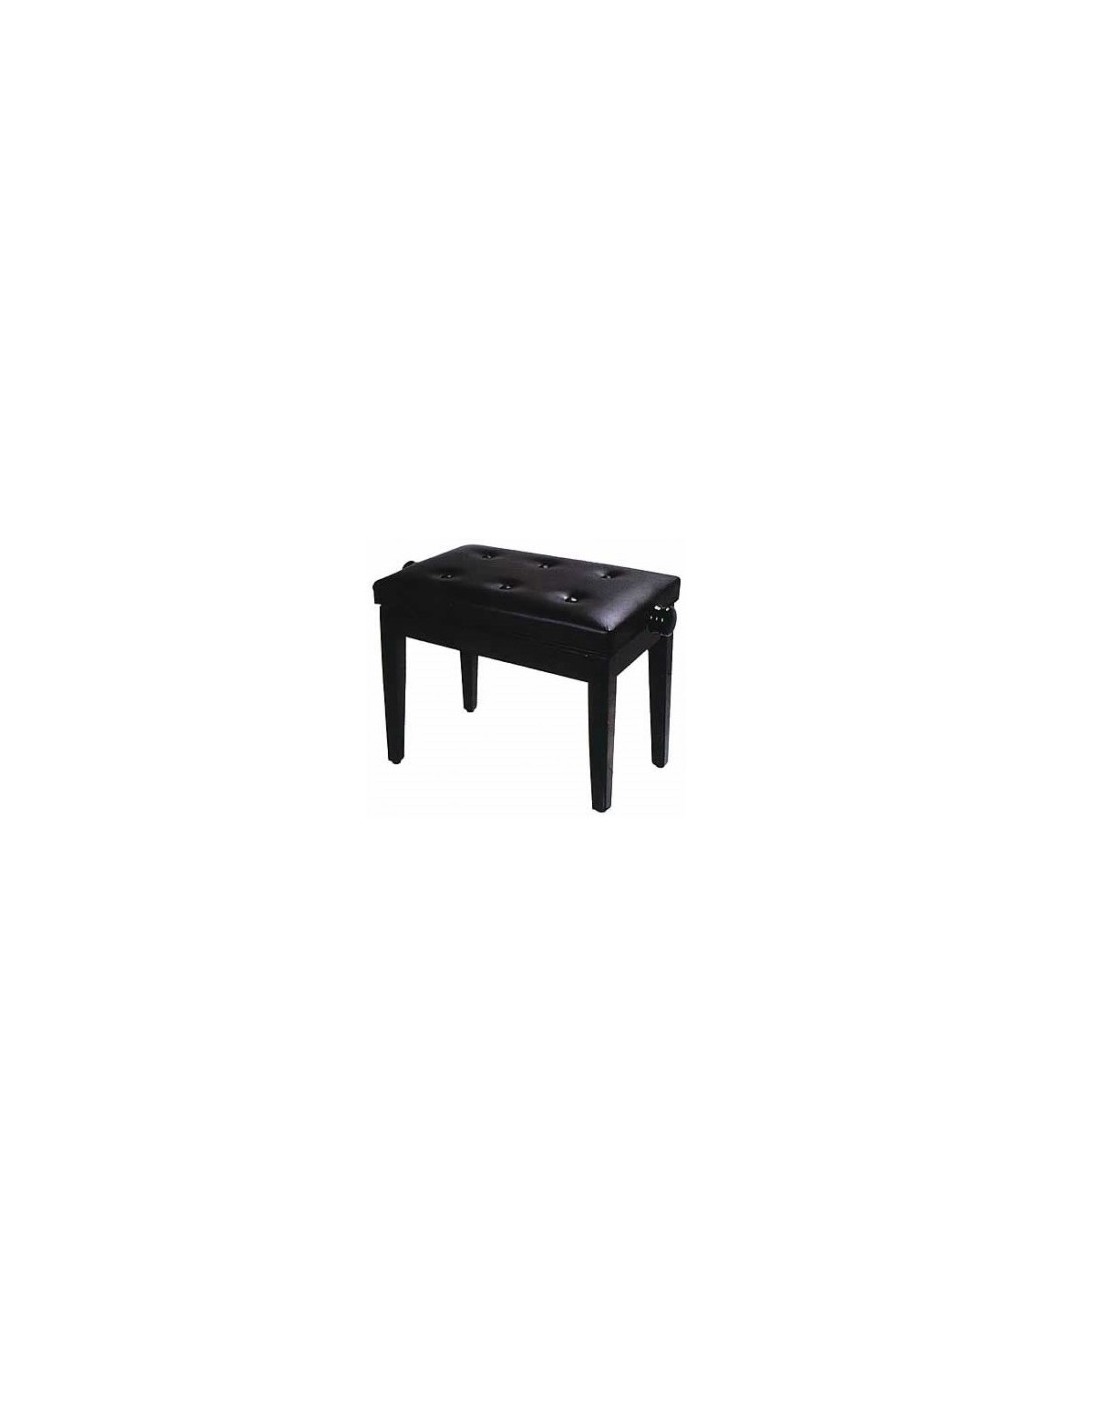 Panca Sedile Sgabello pianoforte altezza regolabile nera lucida